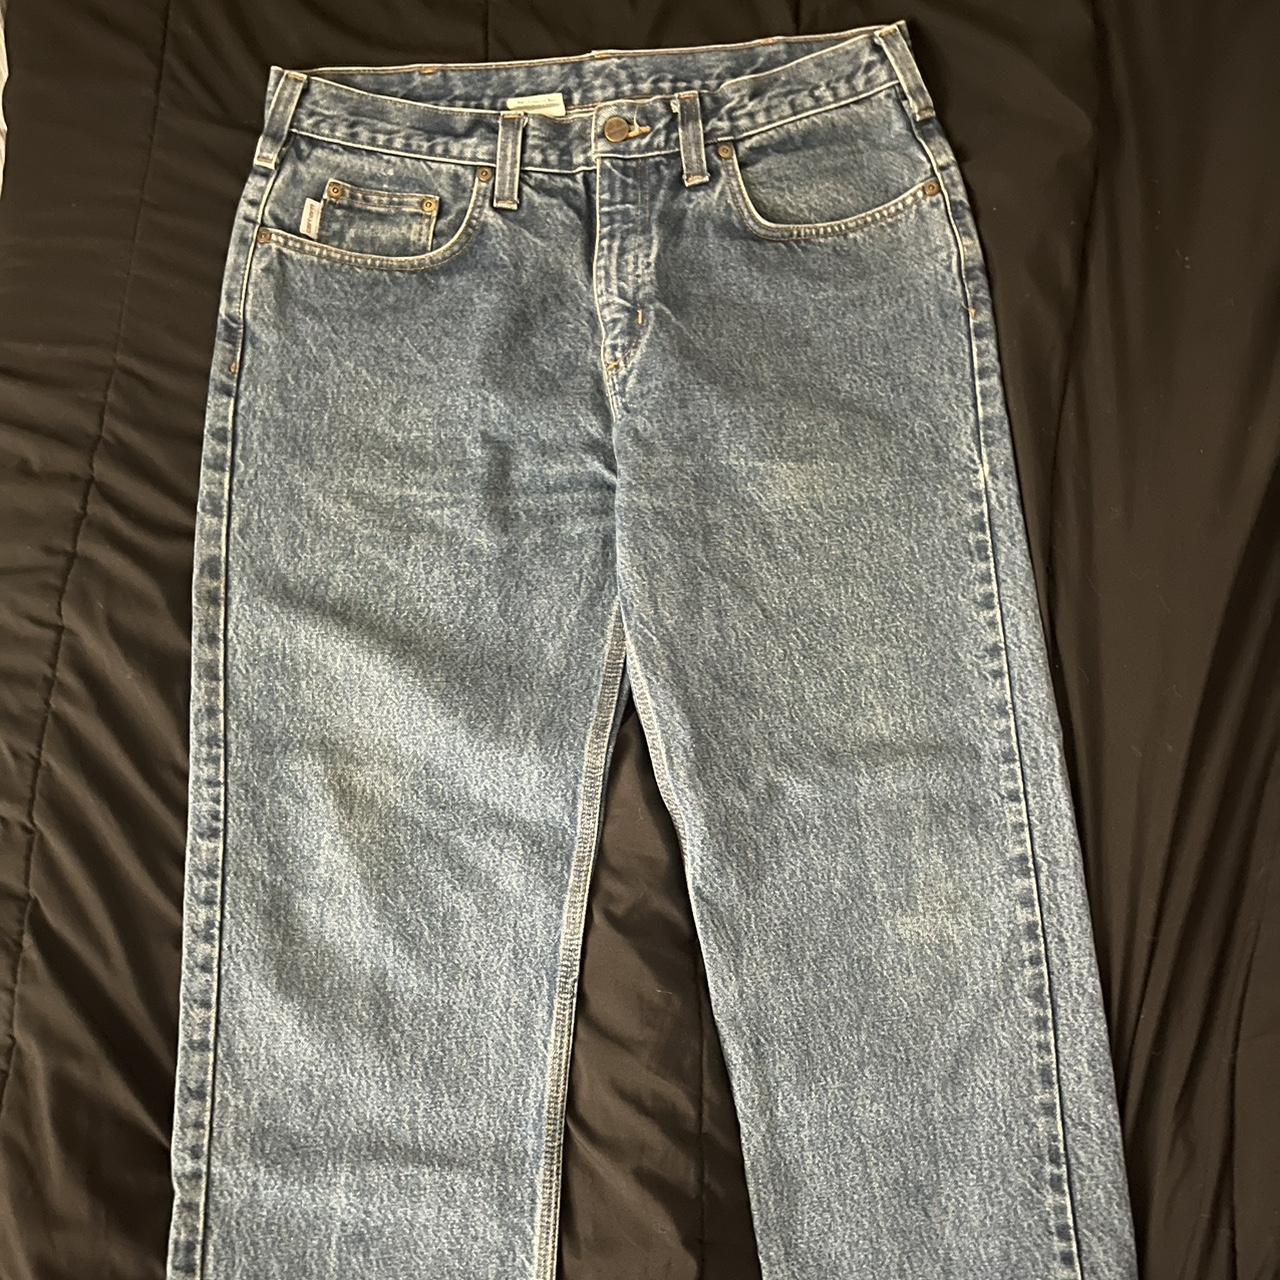 Carhartt Light Blue Vintage Jeans. Bought off a... - Depop